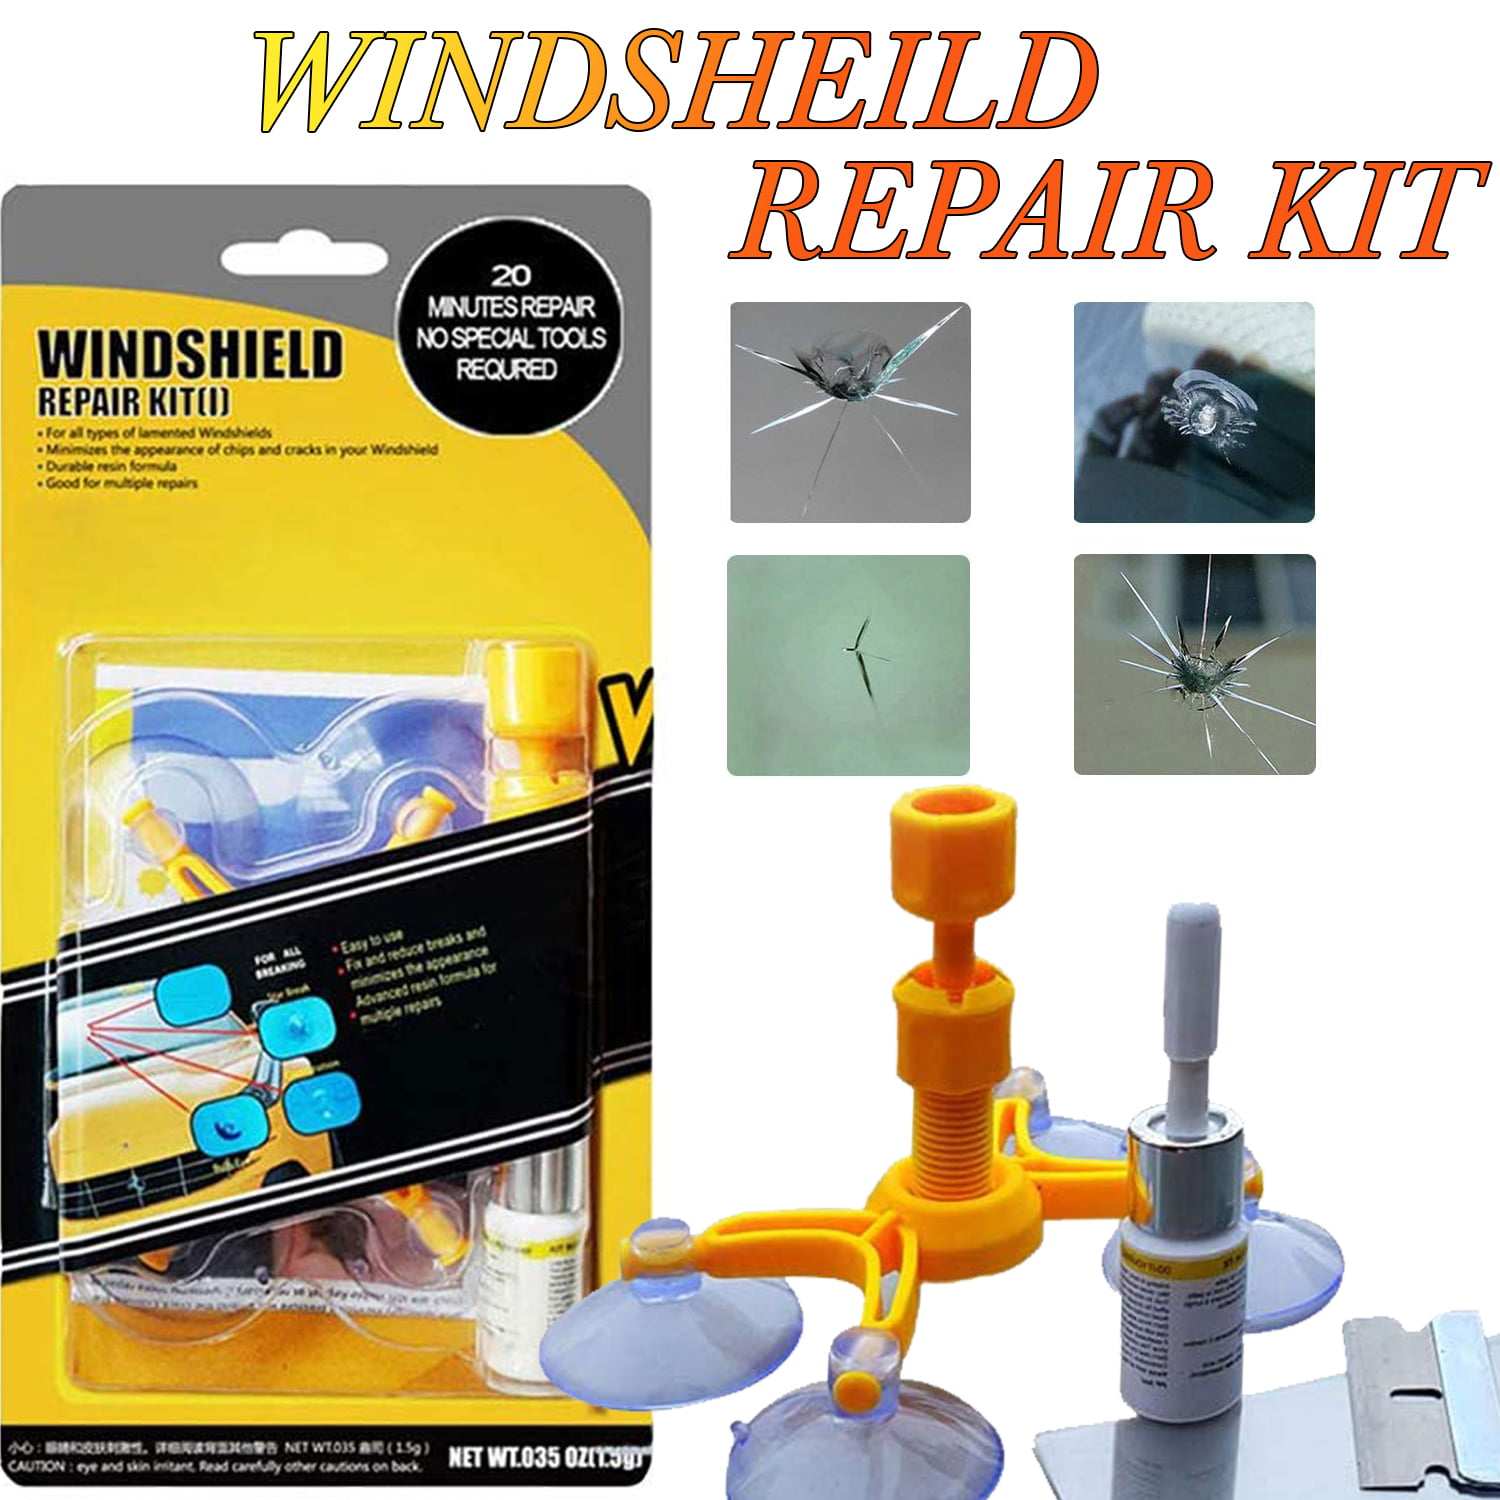 xingxinqi Car Windshield Repair Kit Auto Windshield Repair Tool with Windshield Repair Resin for Auto Glass Windshield Crack Chip Scratch/Chips/Cracks/Bulls-Eyes/Stars